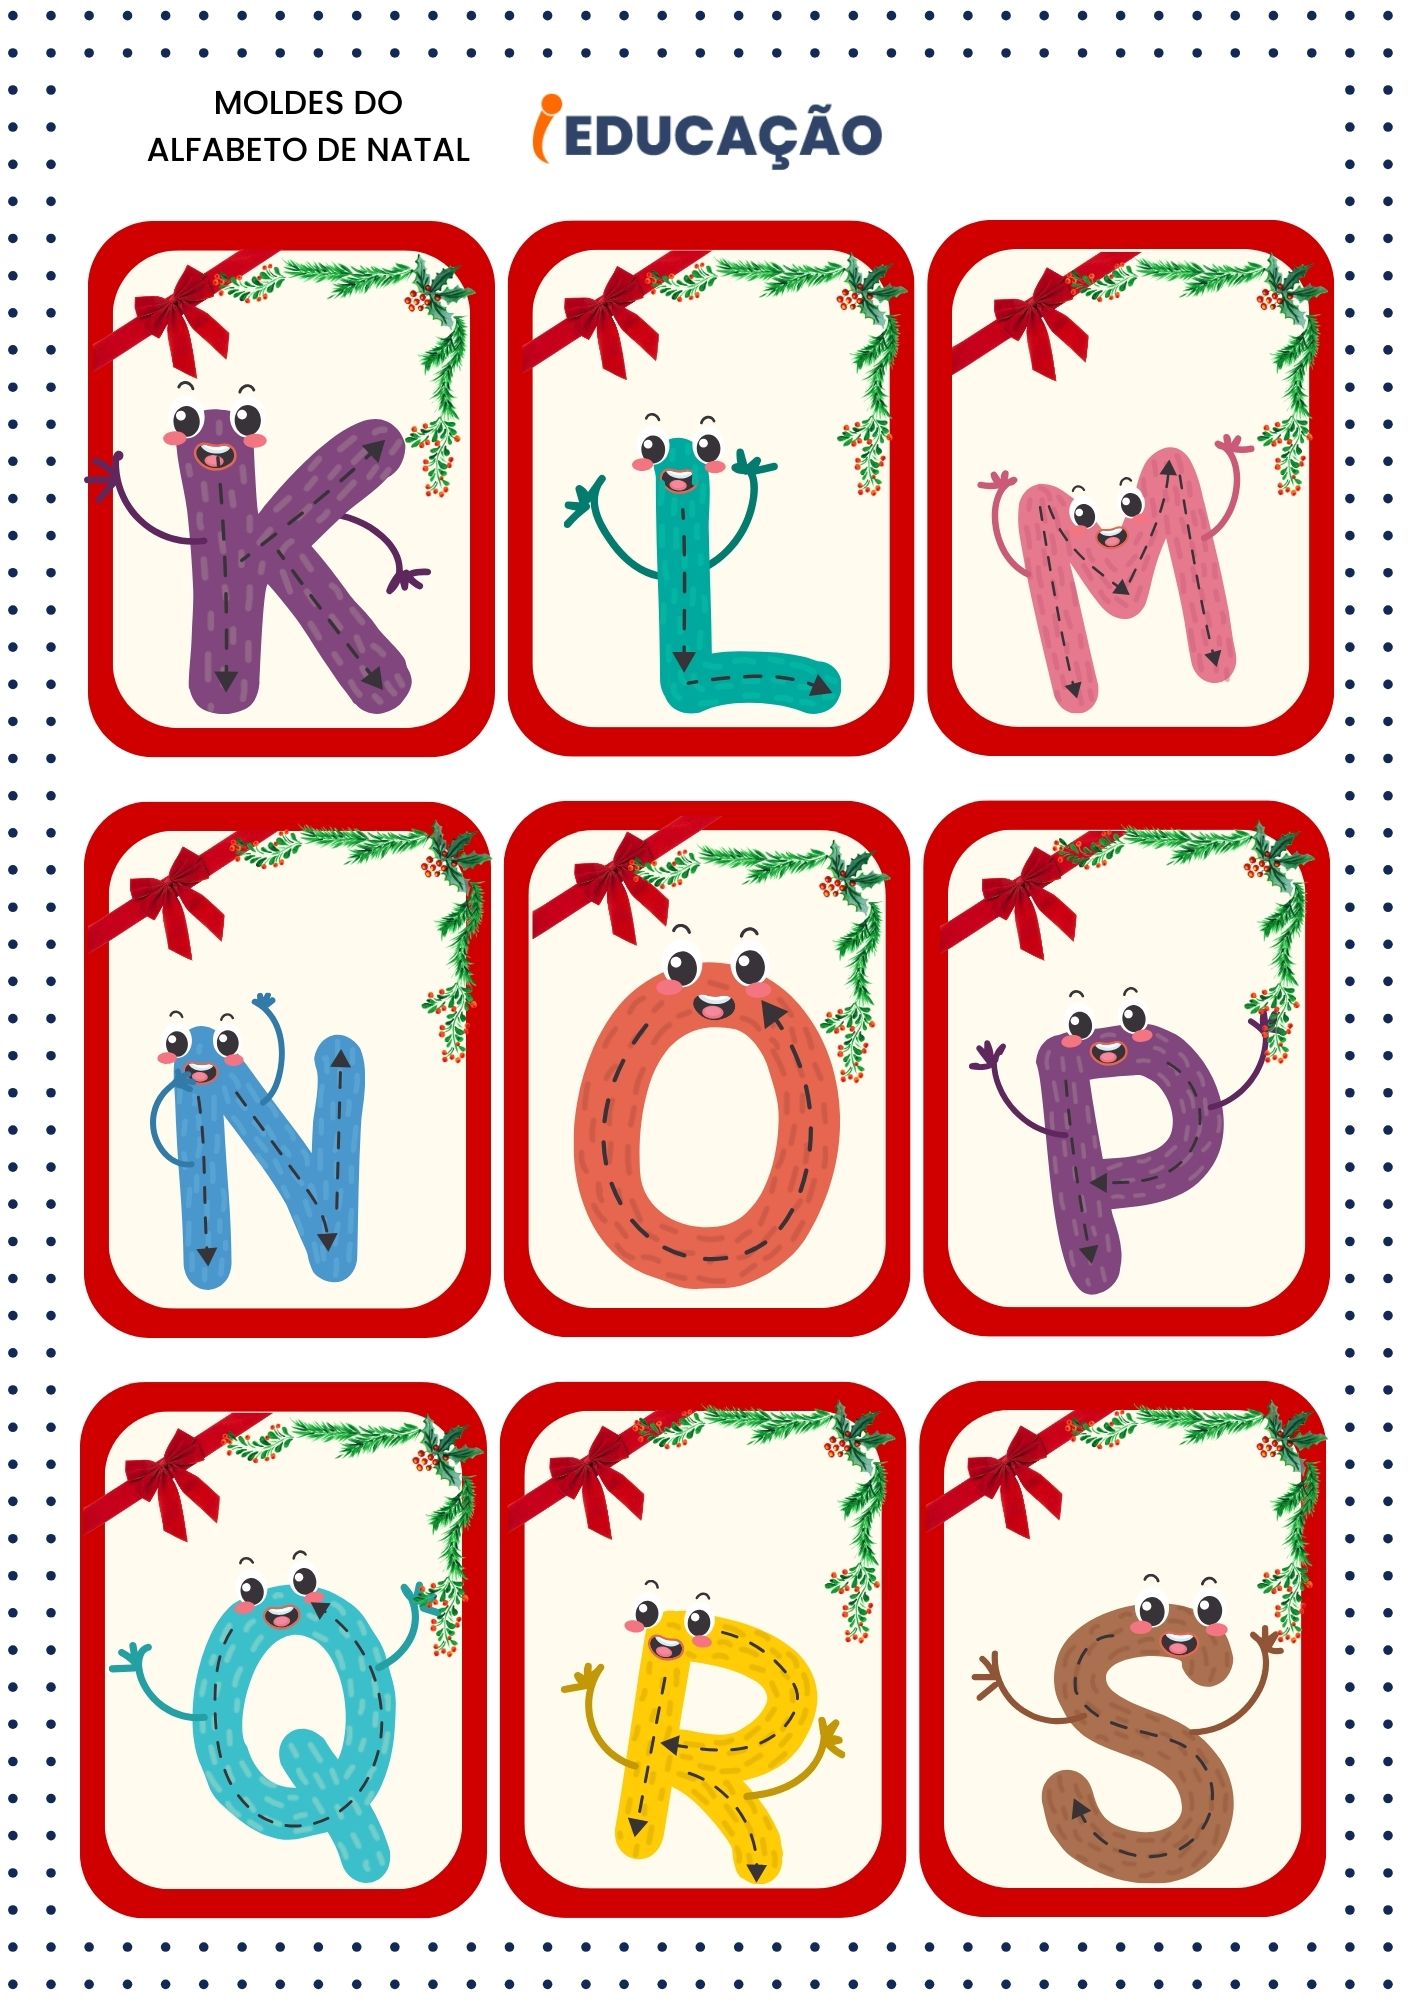 Alfabeto natalino- letras klm.jpg